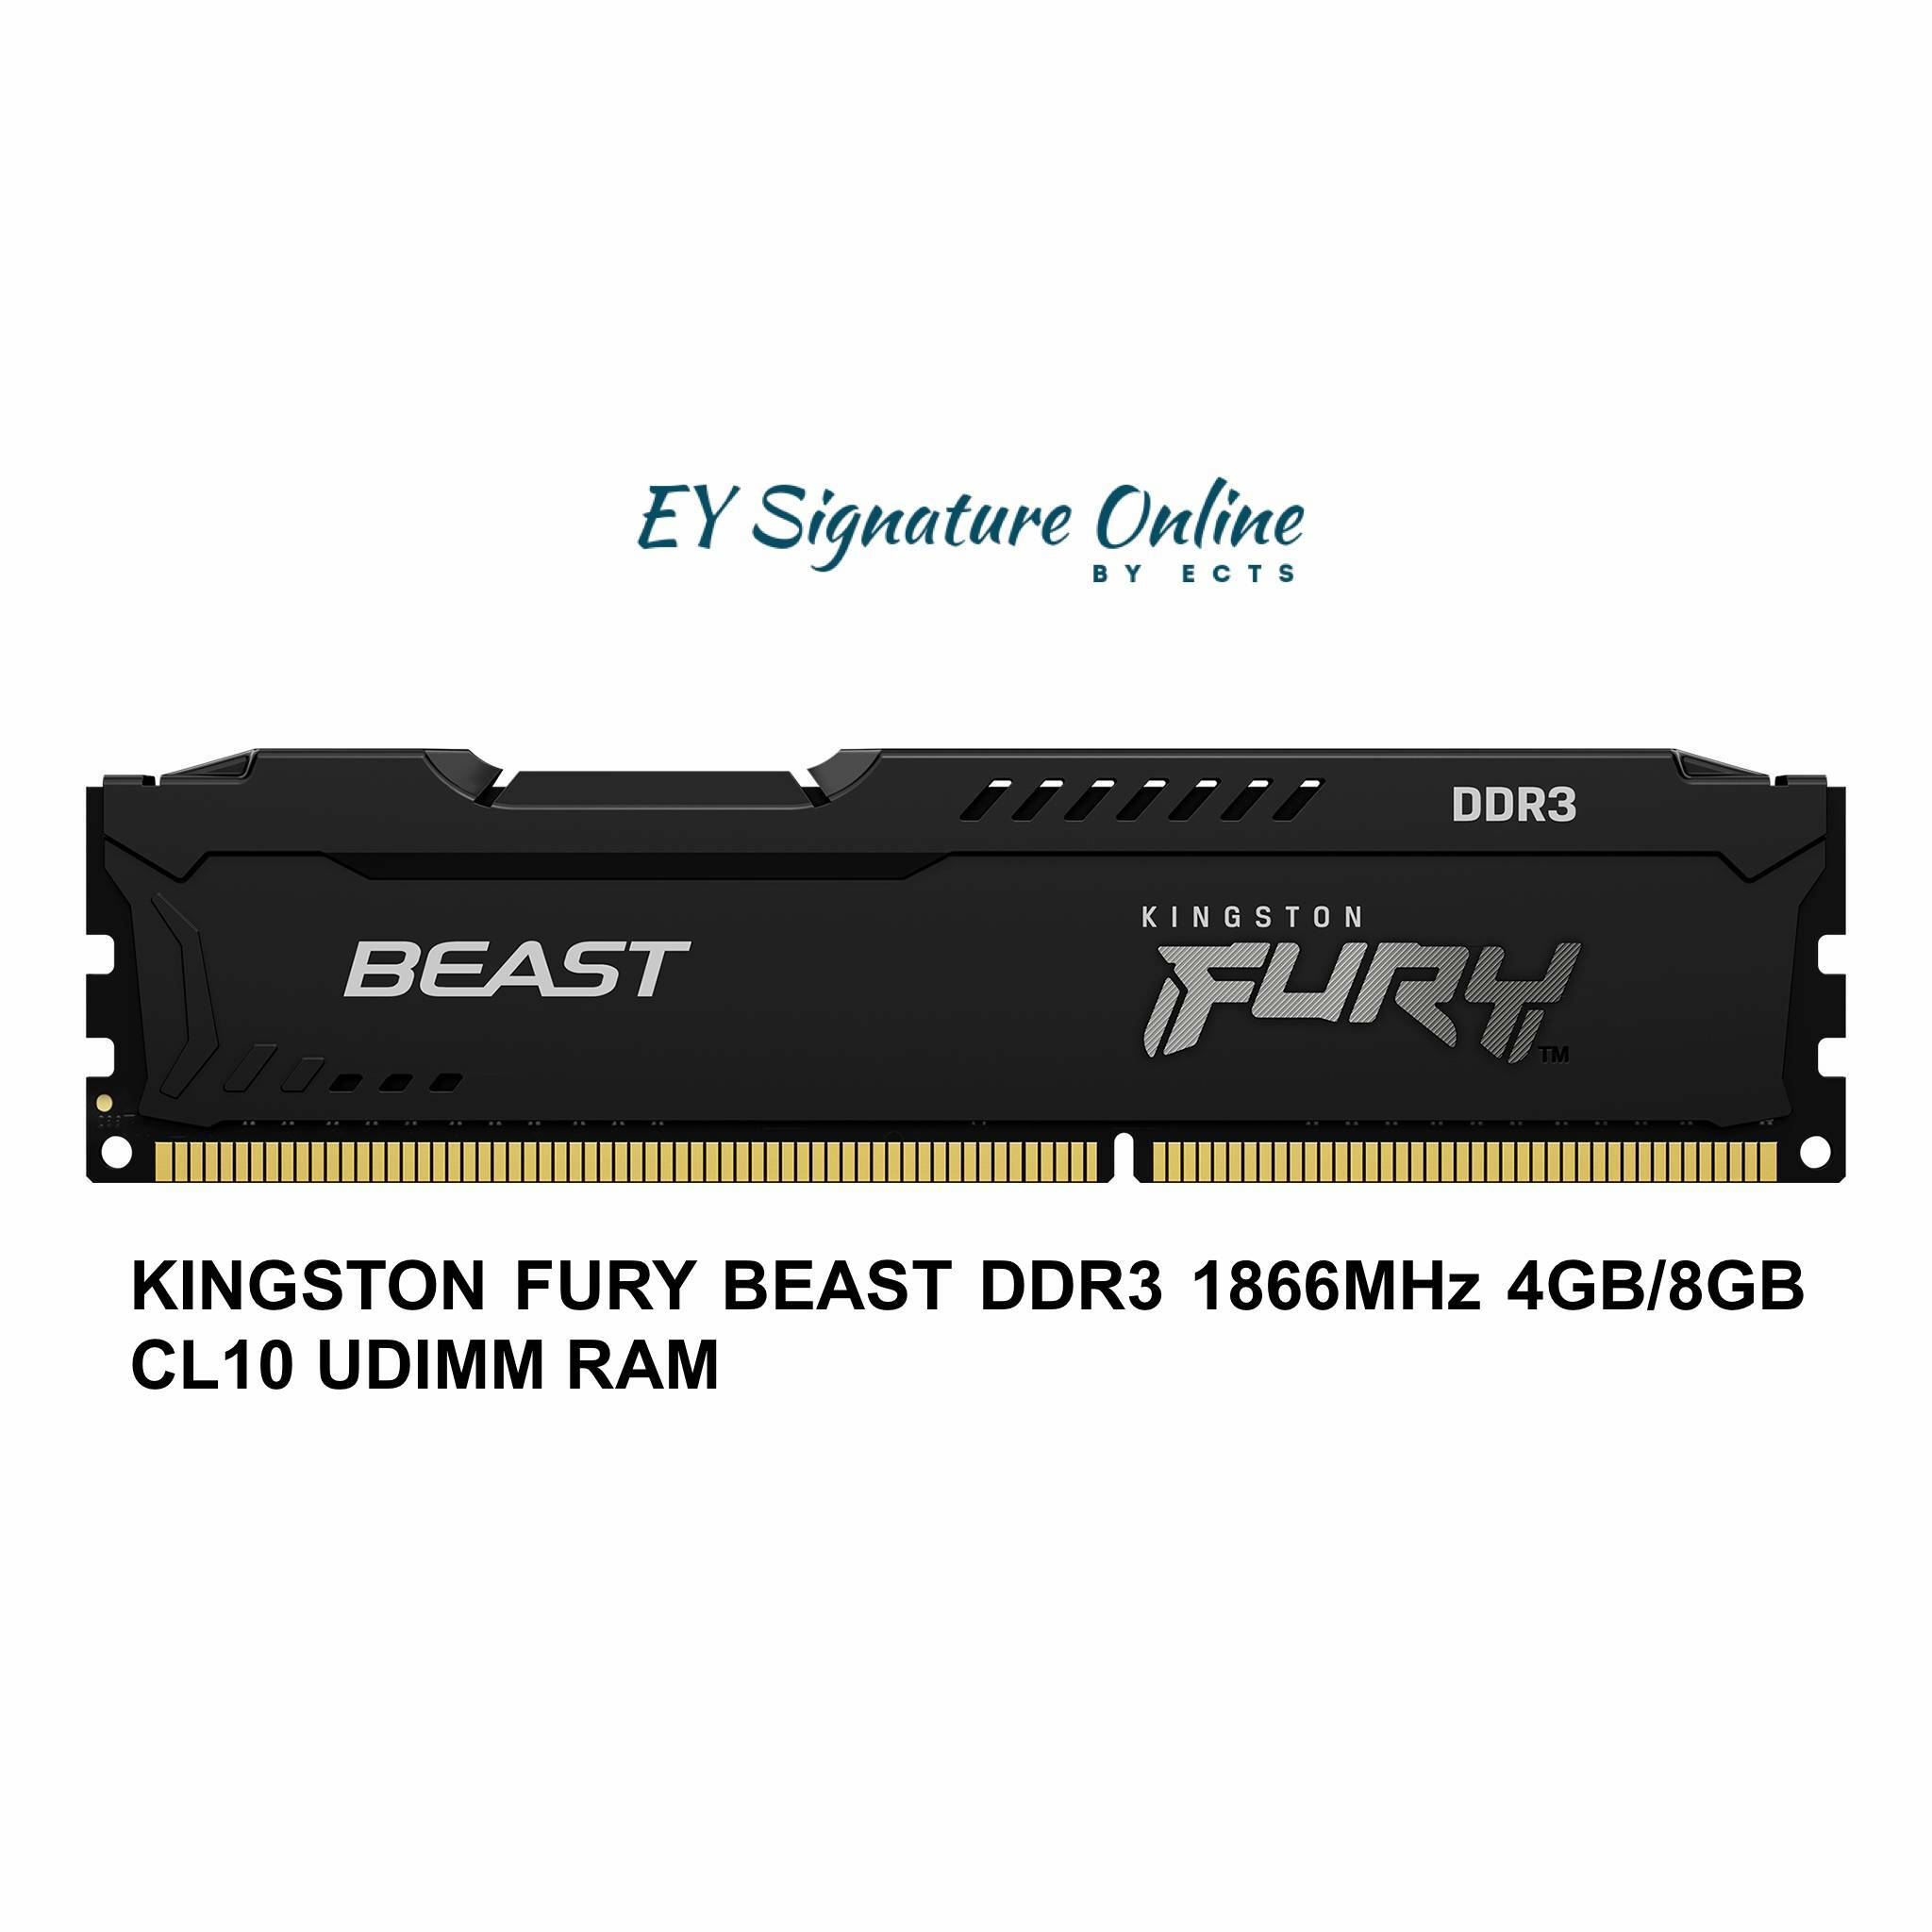 KINGSTON DDR3 FURY BEAST 1866.jpg